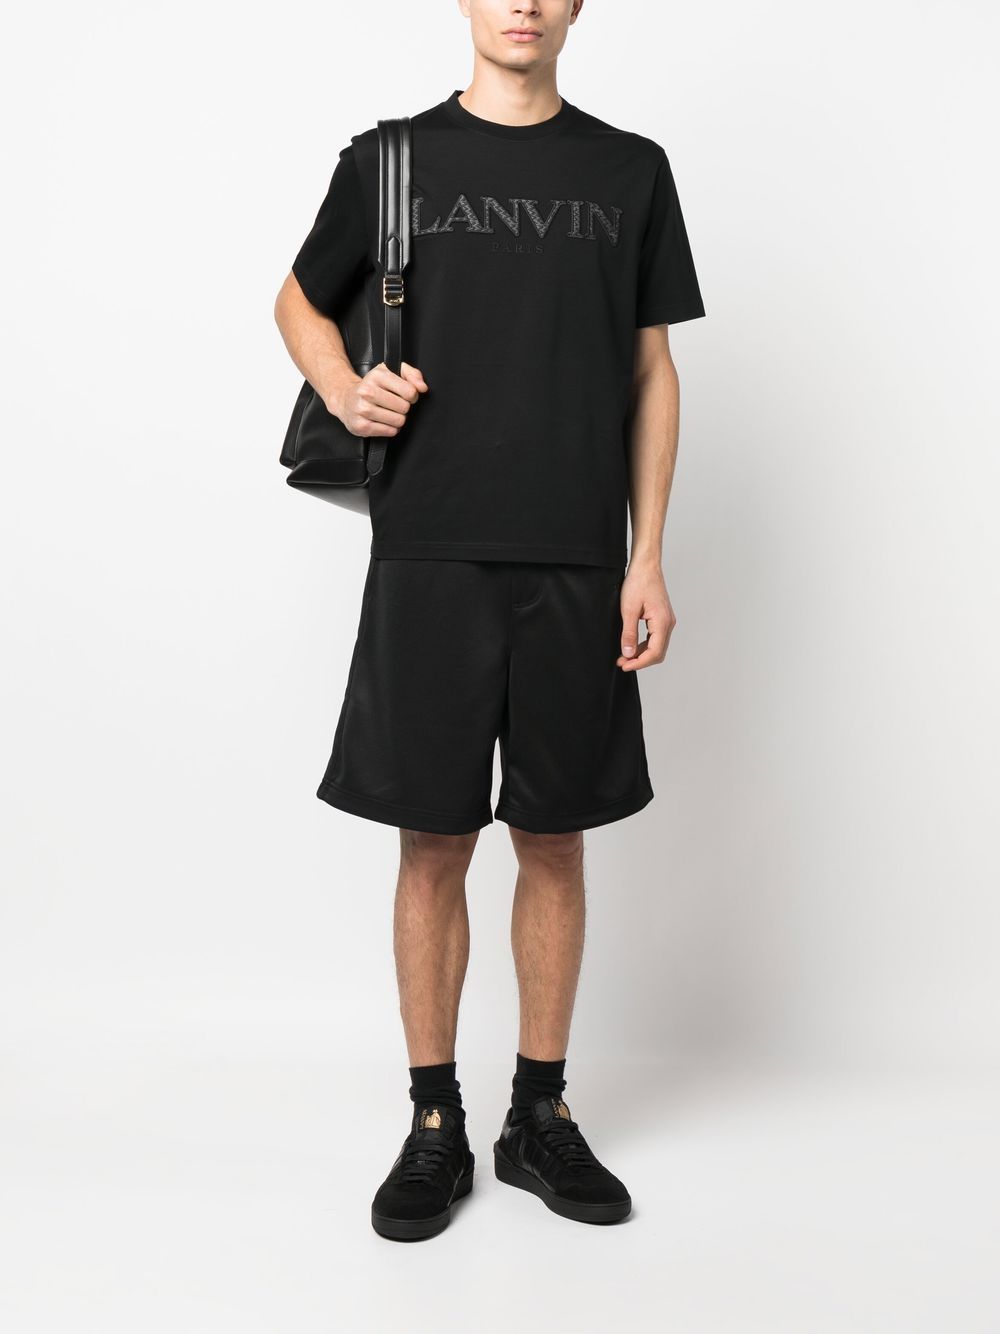 Lanvin Lanvin Shorts Black